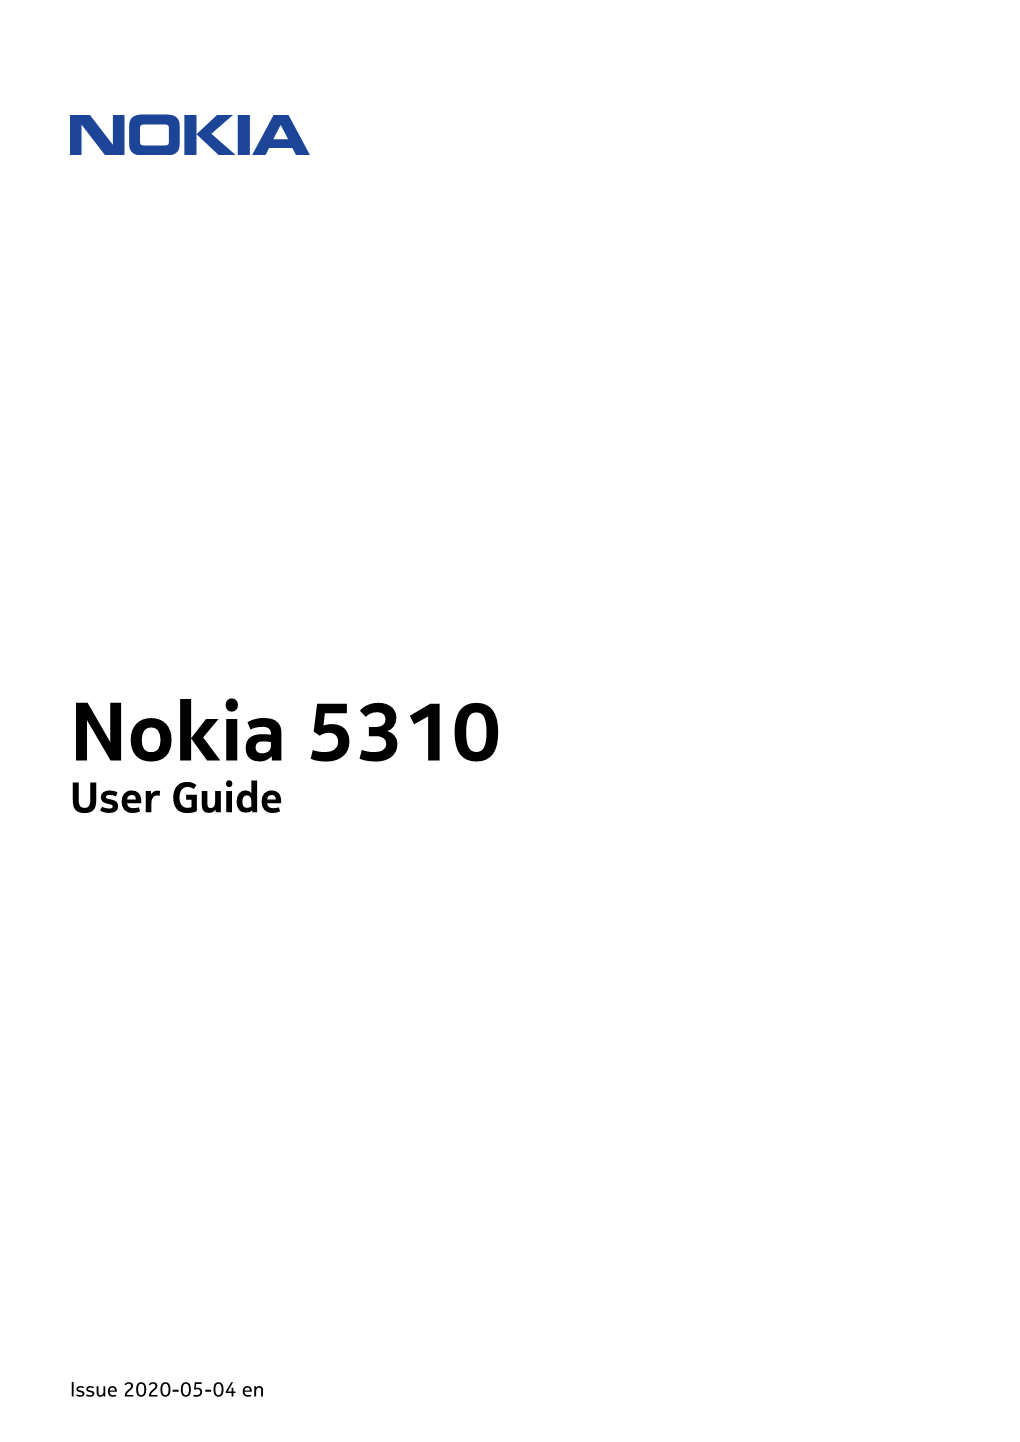 Nokia 5310 User Guide